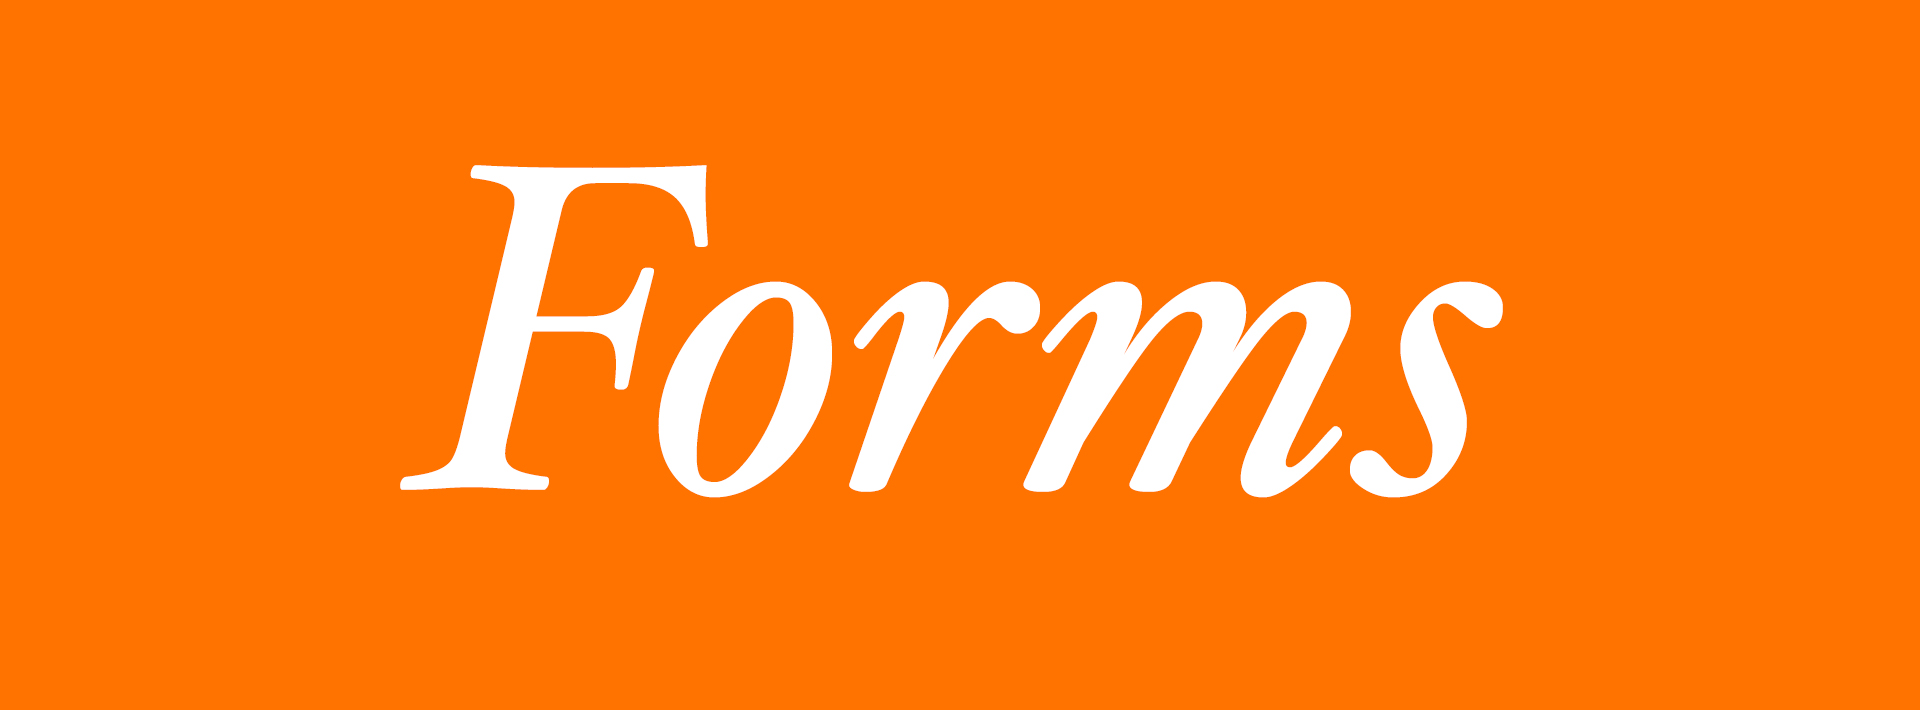 FormsB